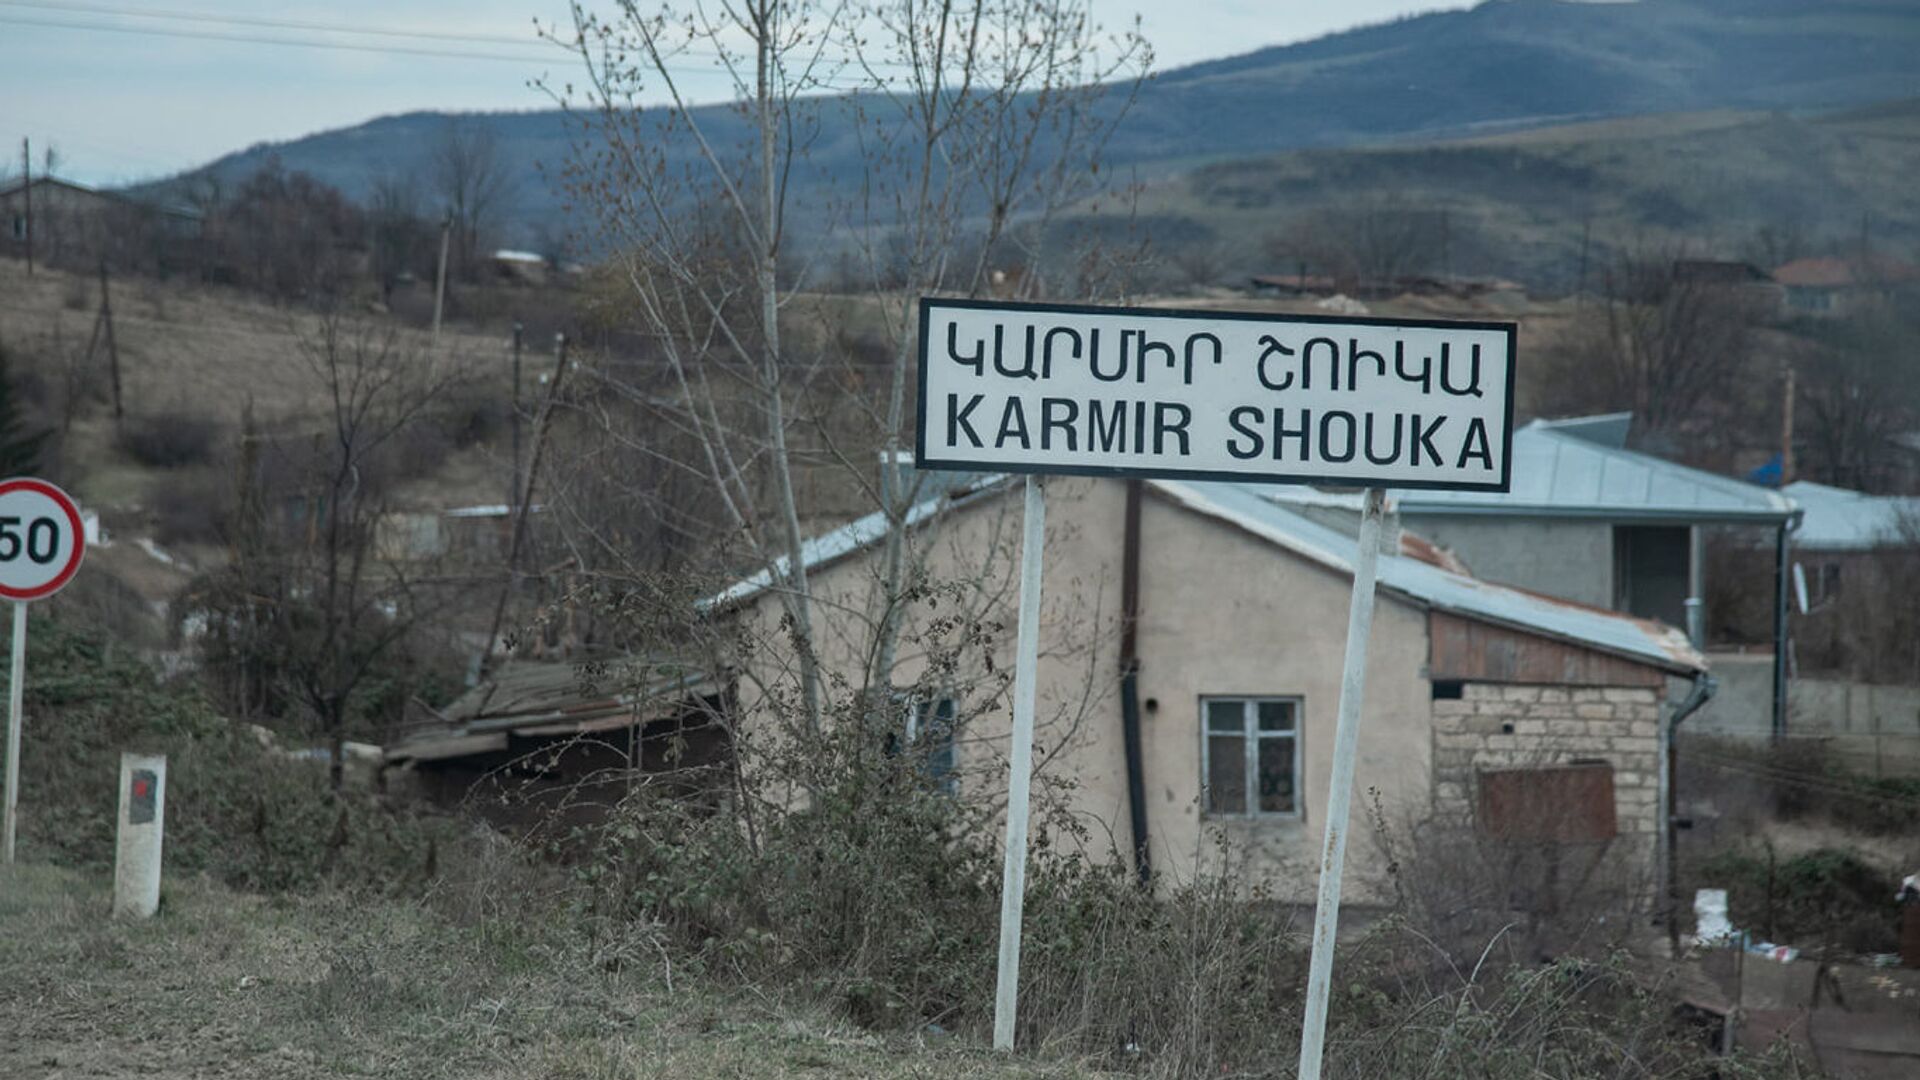 Село Кармир Шука в Карабахе - Sputnik Армения, 1920, 06.12.2021